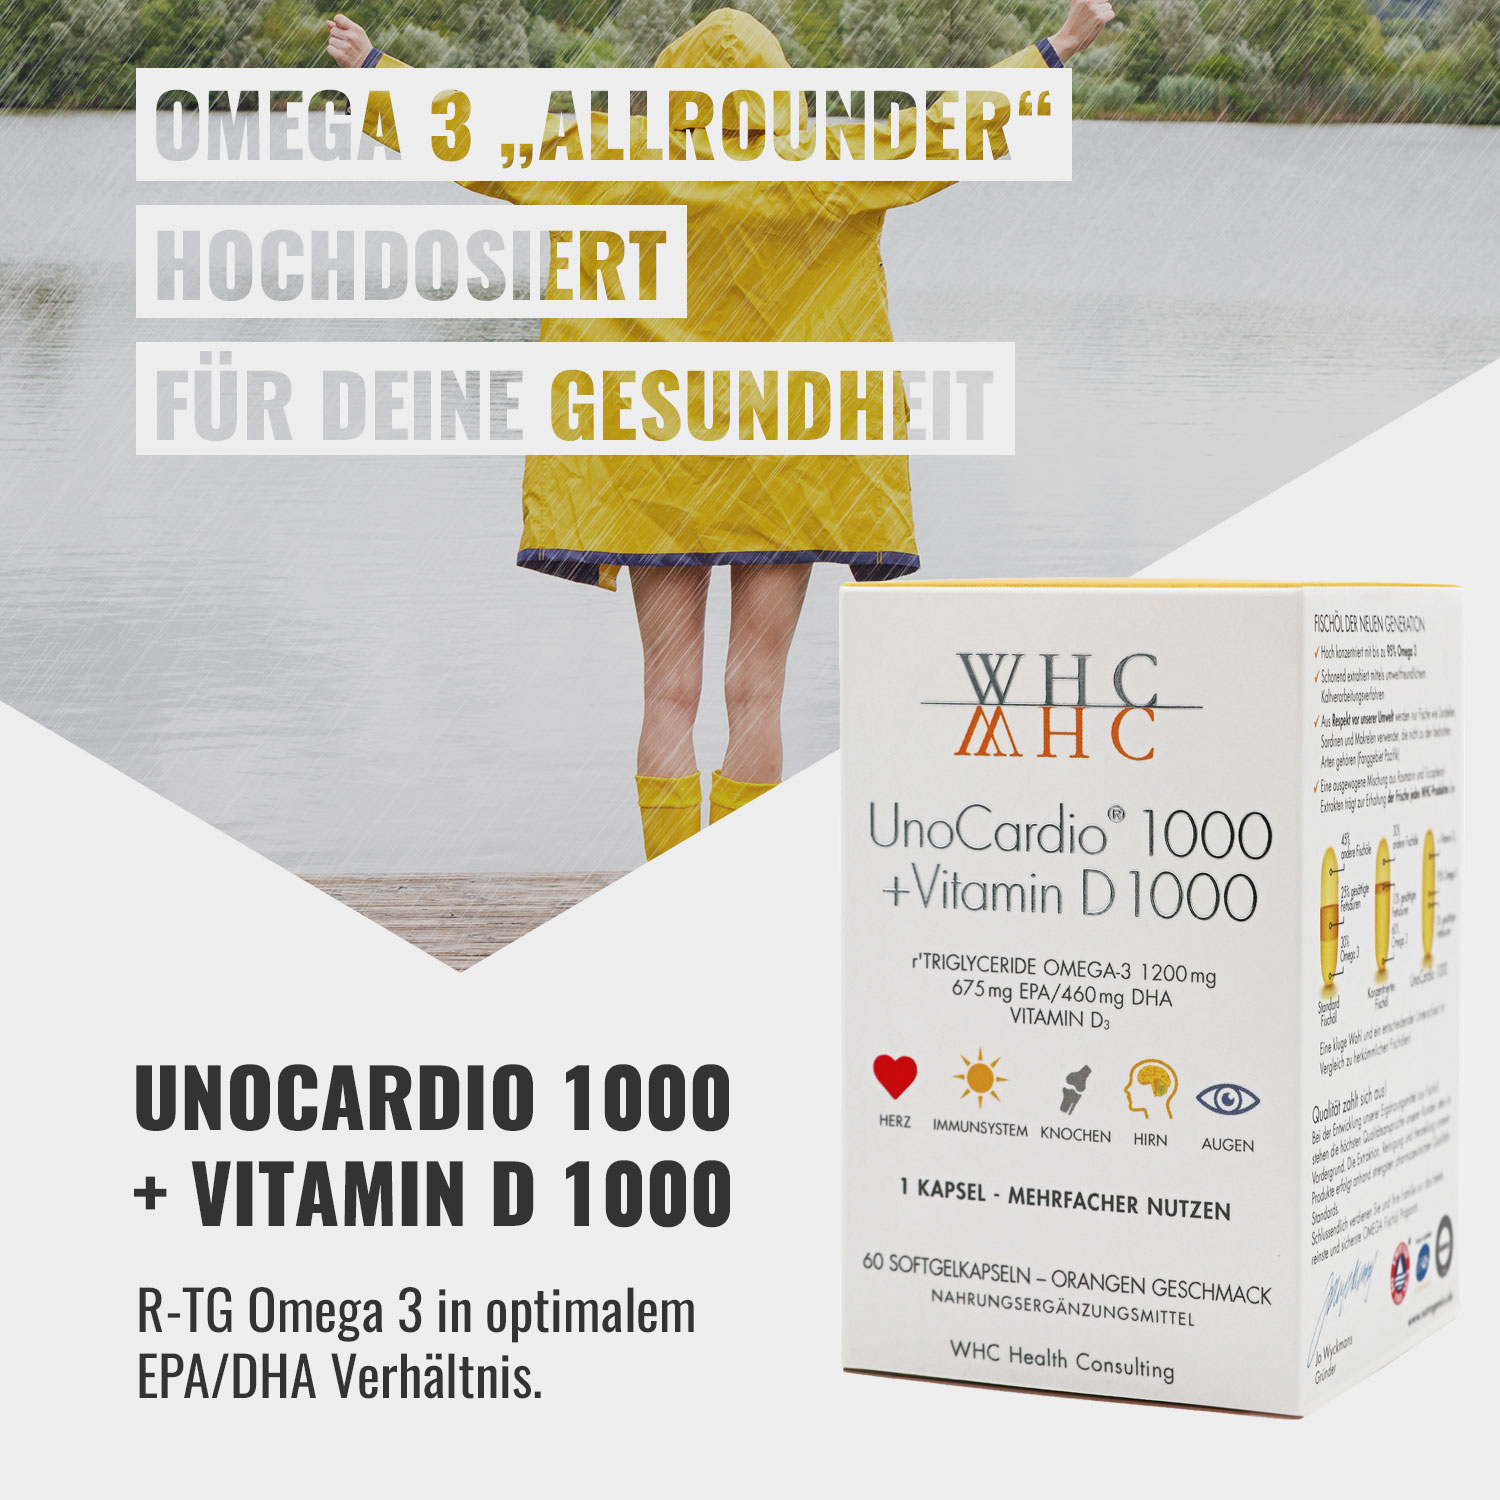 WHC Unocardio 1000 Omega 3